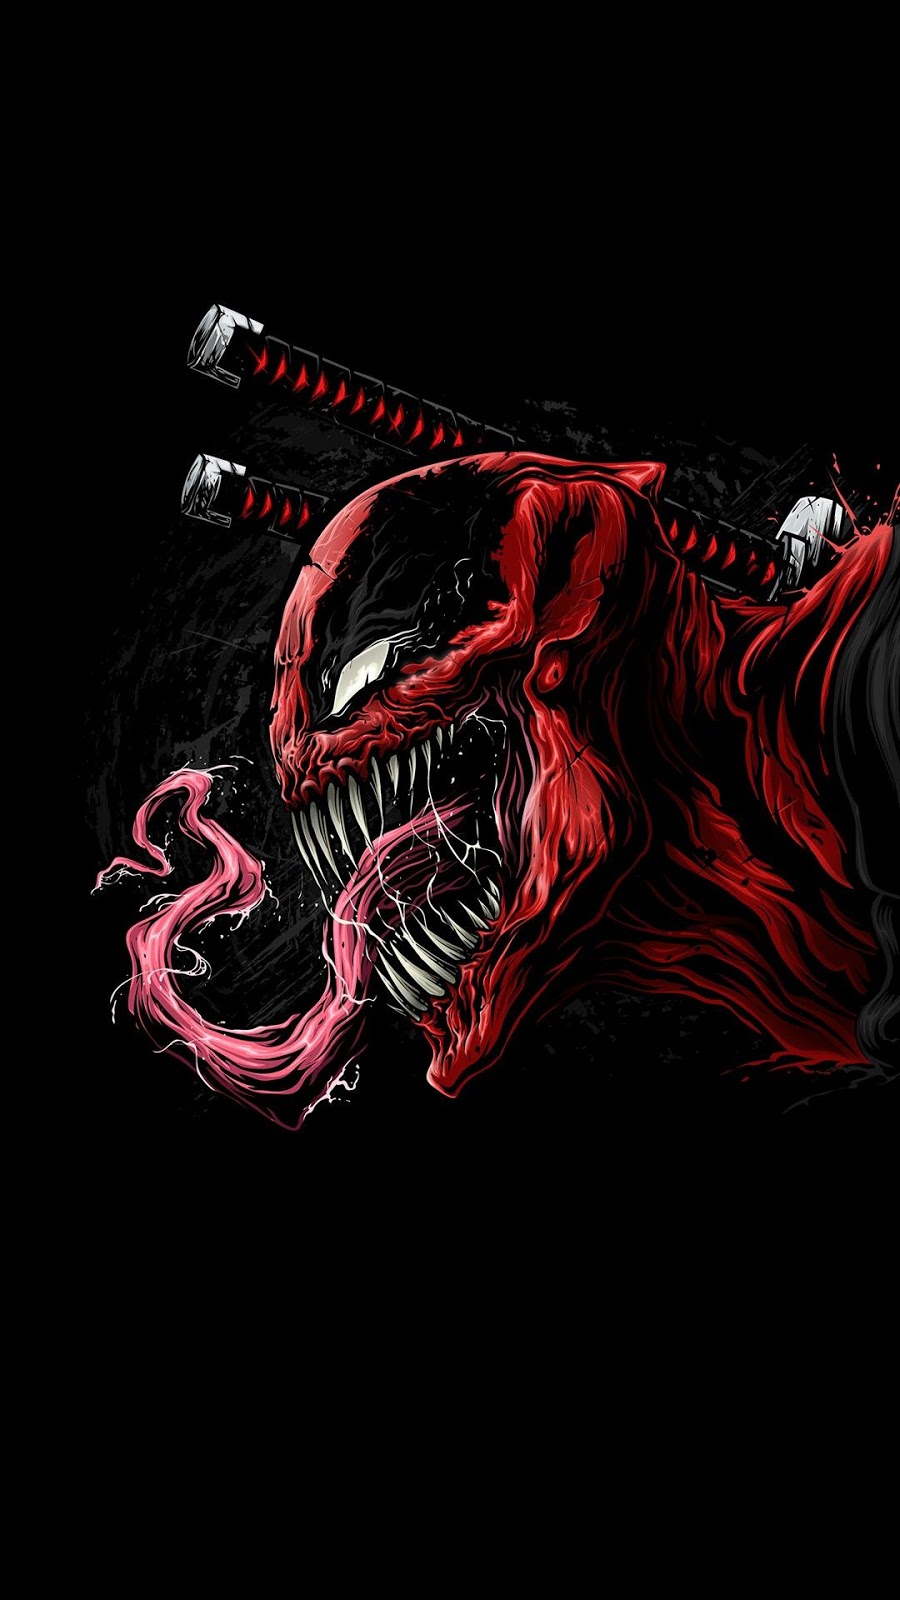 900x1600 Spiderman Venom Цифровое изображение Iphone X Spiderman Venom Цифровое изображение Iphone X - это настольный компьютер в формате HD… | Marvel wallpaper hd 